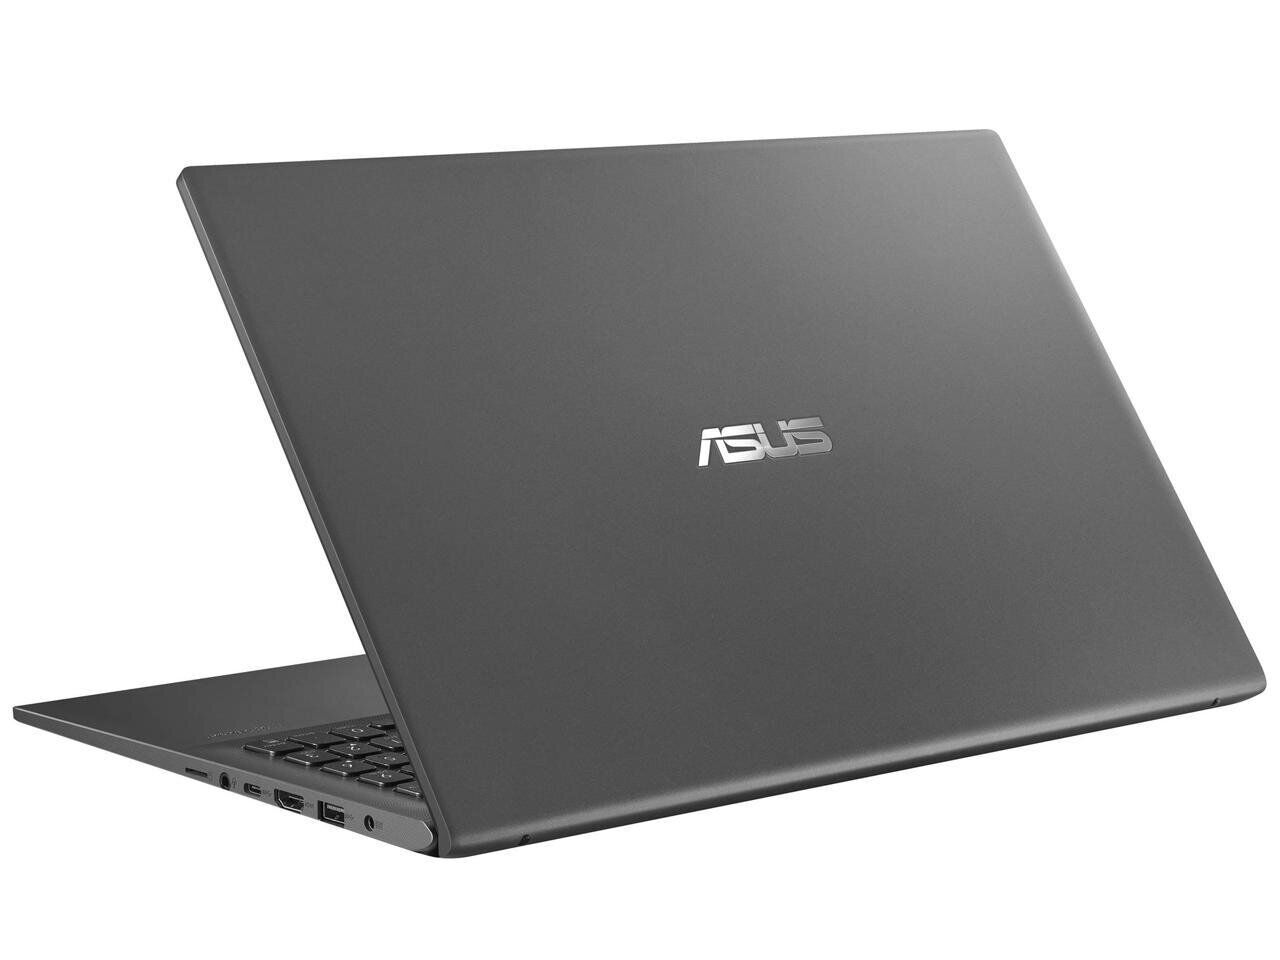 Ноутбуки Asus VivoBook F512J Intel i3-1005G1/DDR4 4GB/SSD 128GB/UMA/15,6 FHD LED/No DVD/RU (R564JA-UH31T)